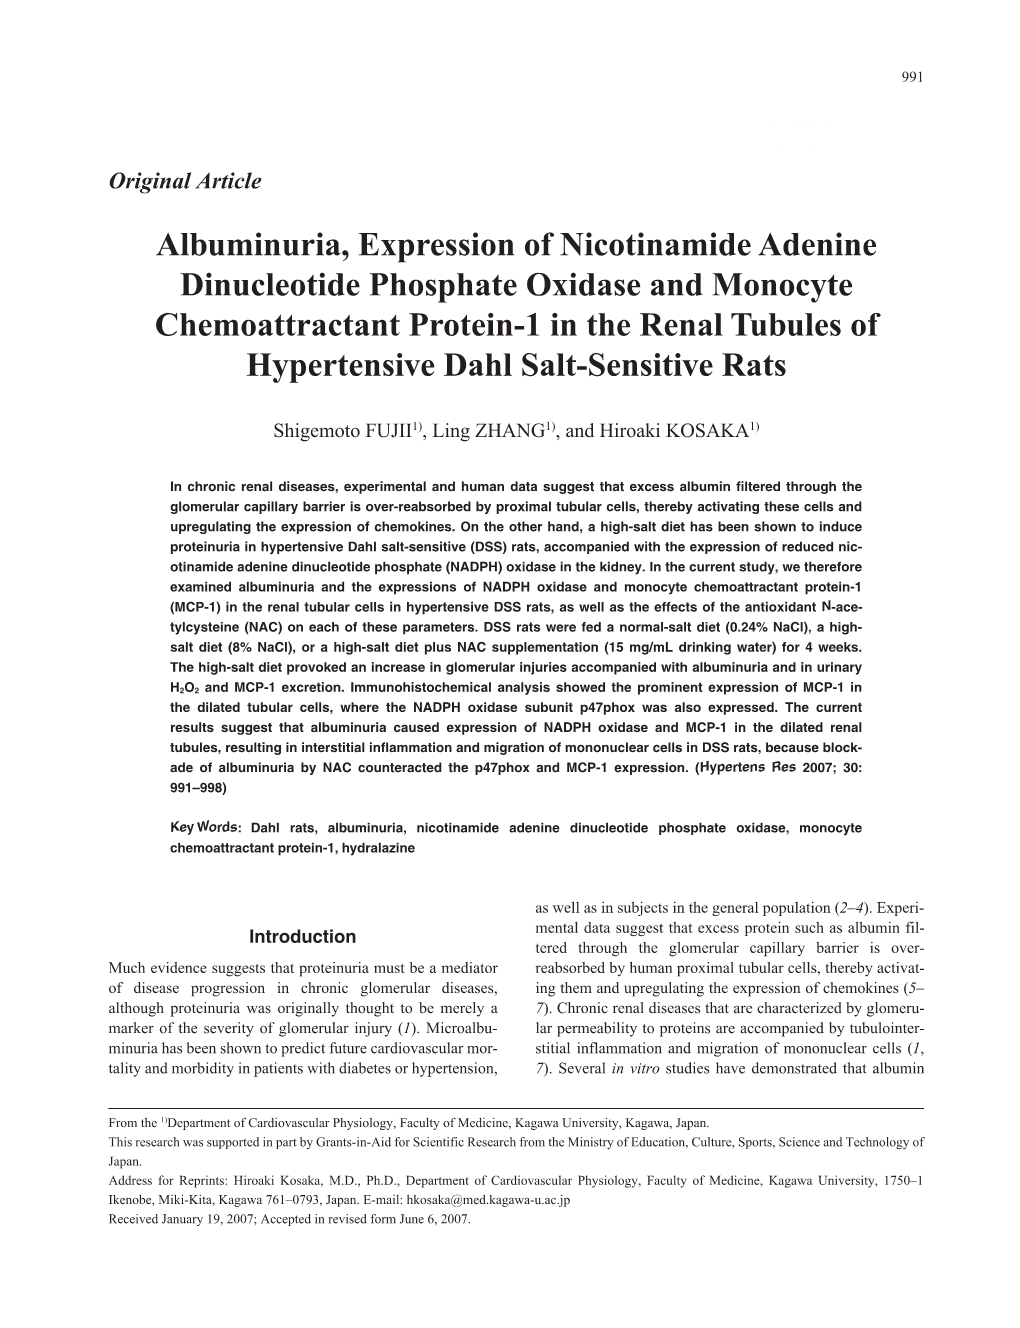 Albuminuria, Expression of Nicotinamide Adenine Dinucleotide